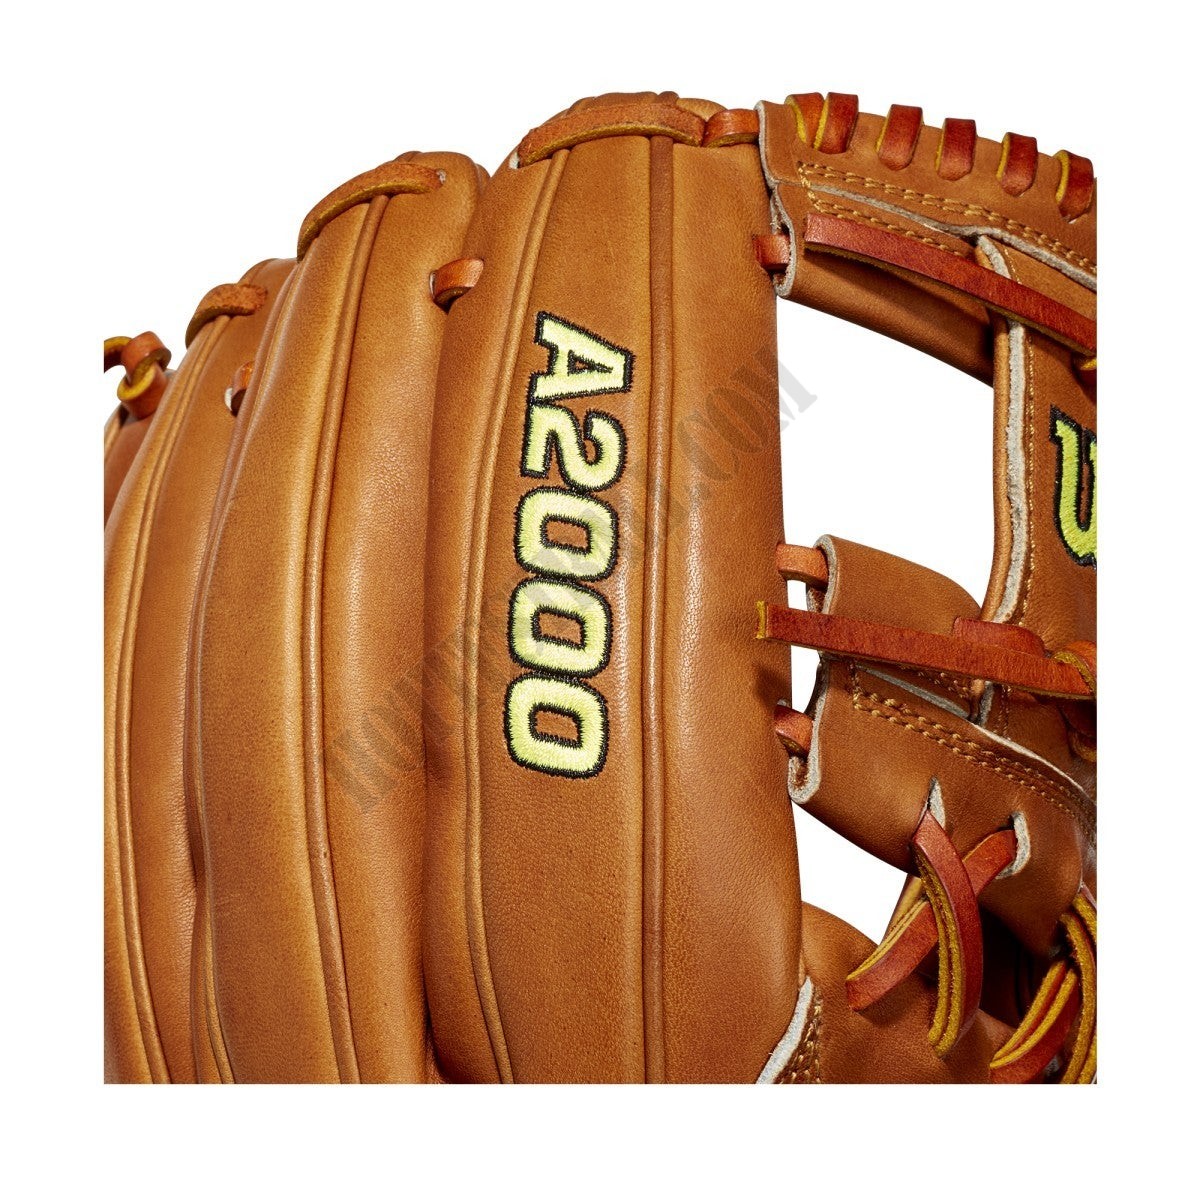 2021 A2000 1787 11.75" Infield Baseball Glove ● Wilson Promotions - -6